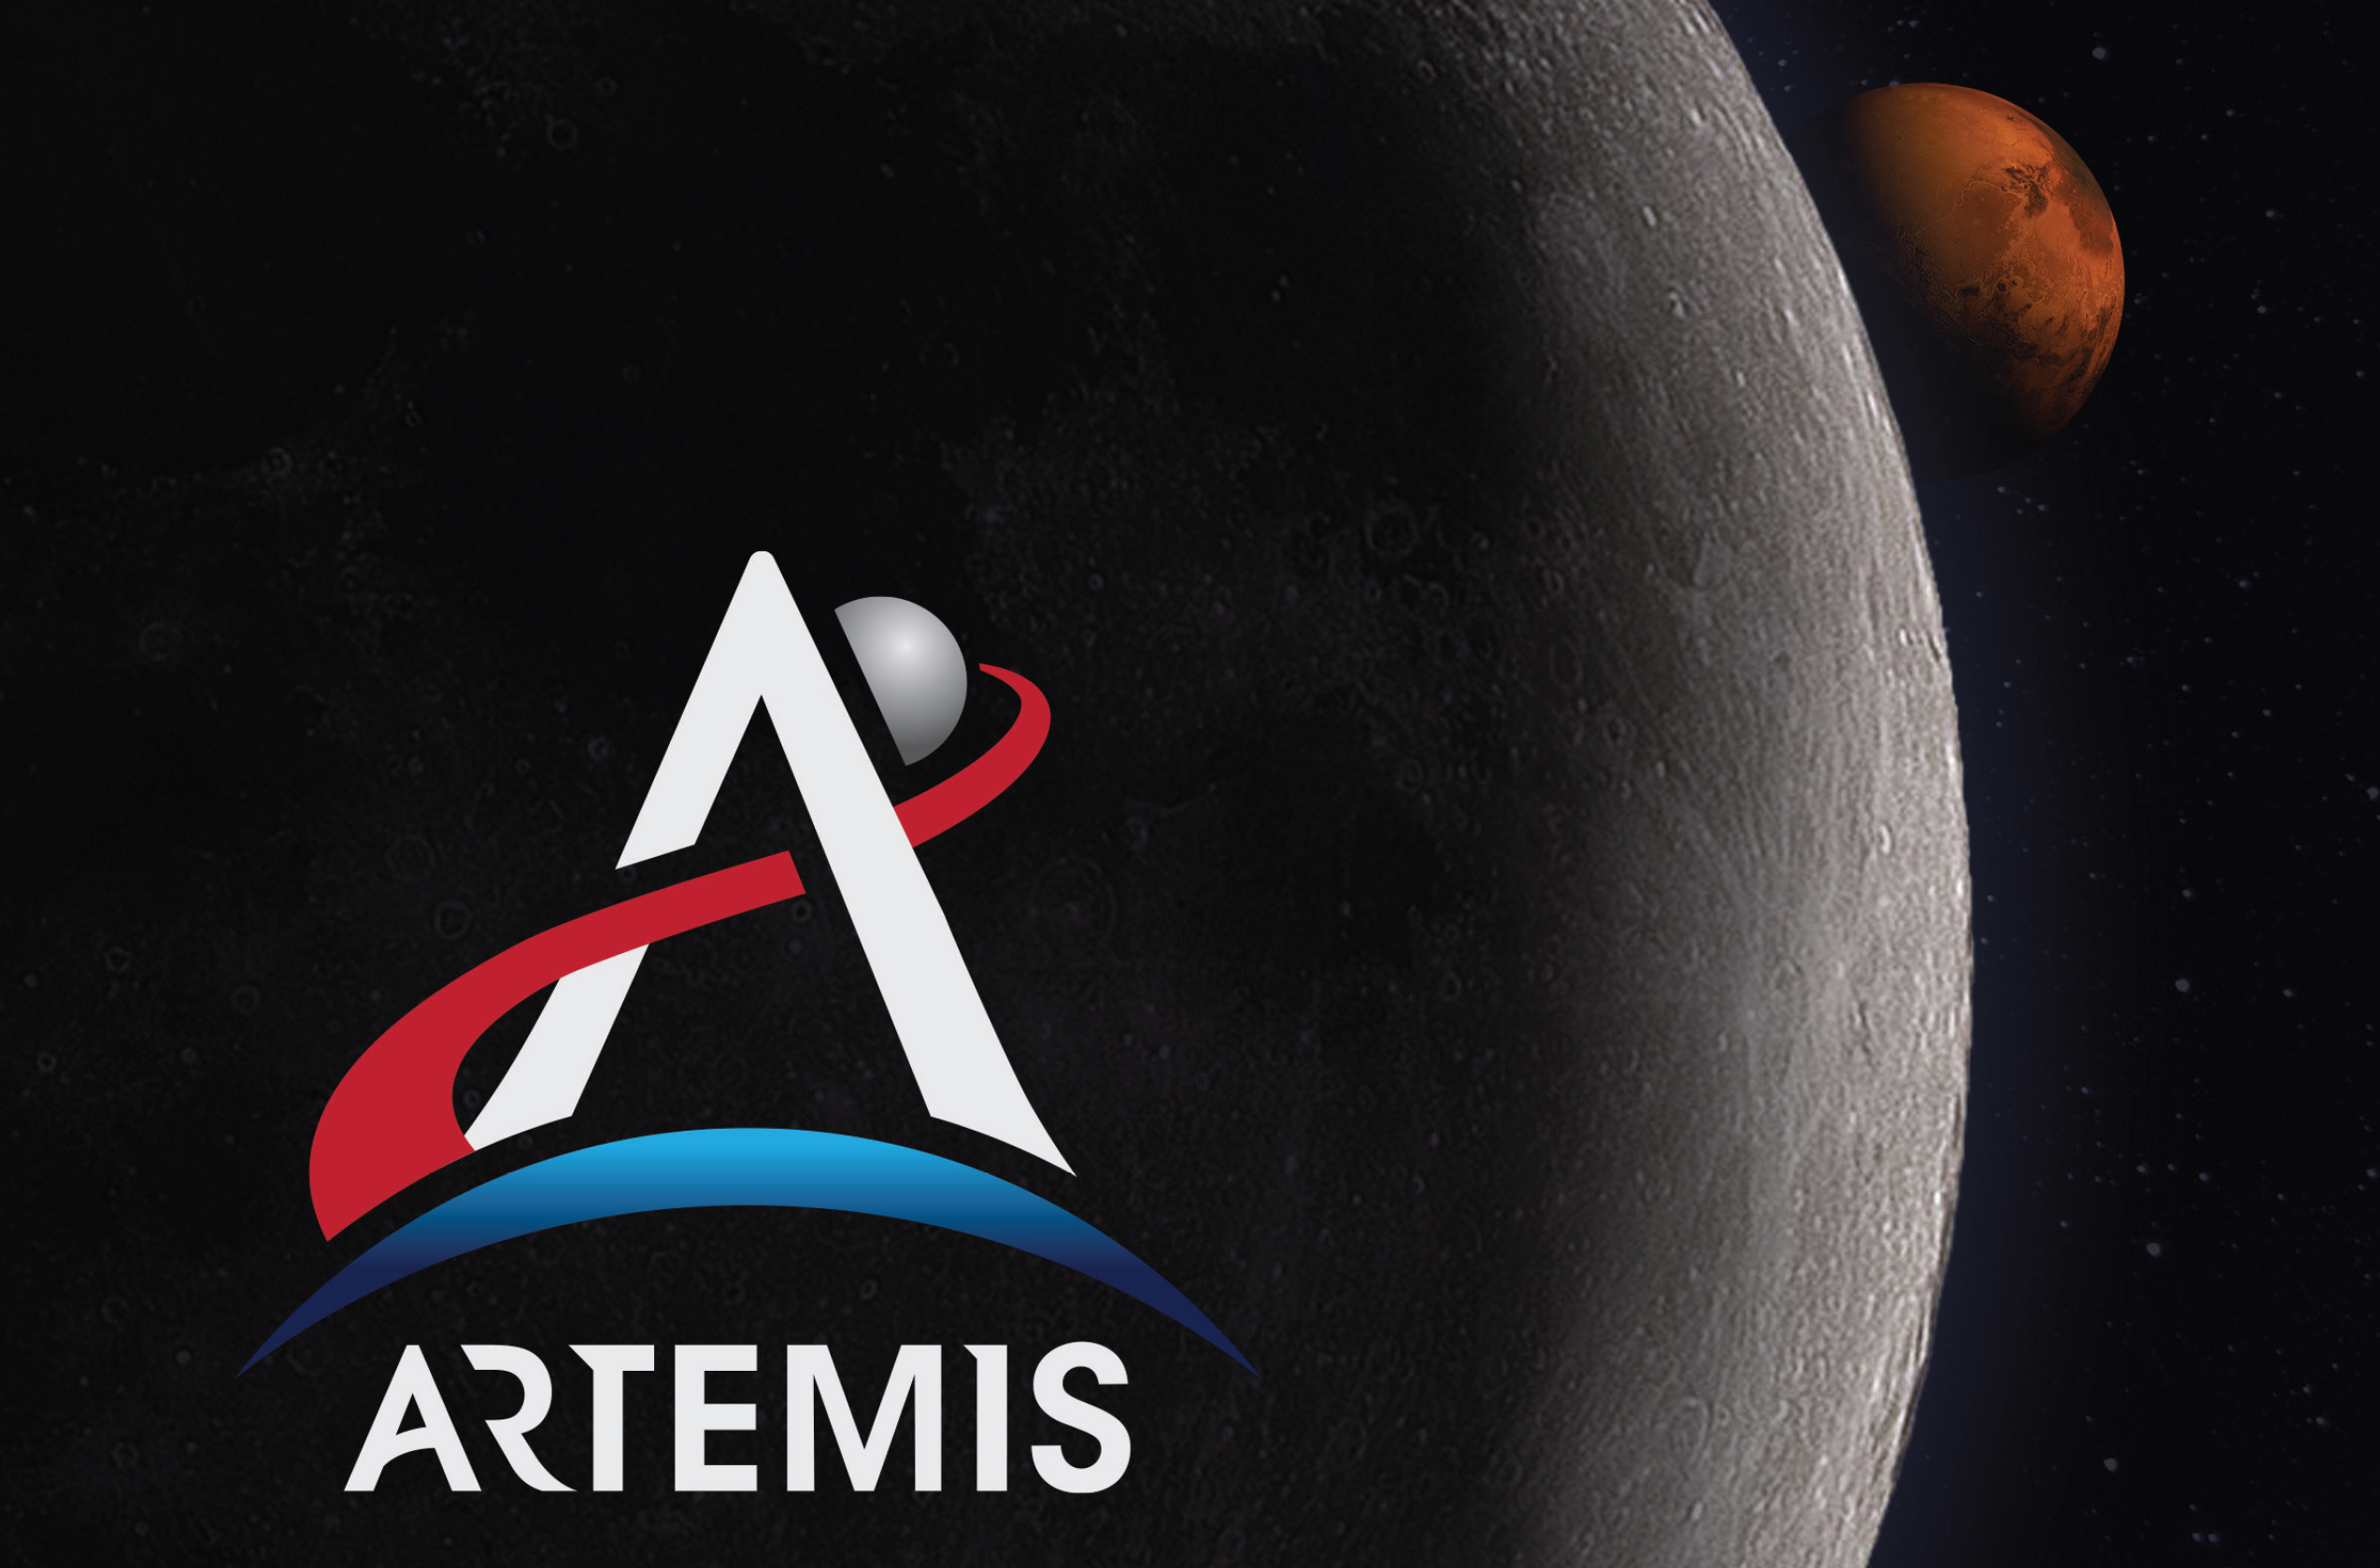 The Artemis Missions Phases I-III